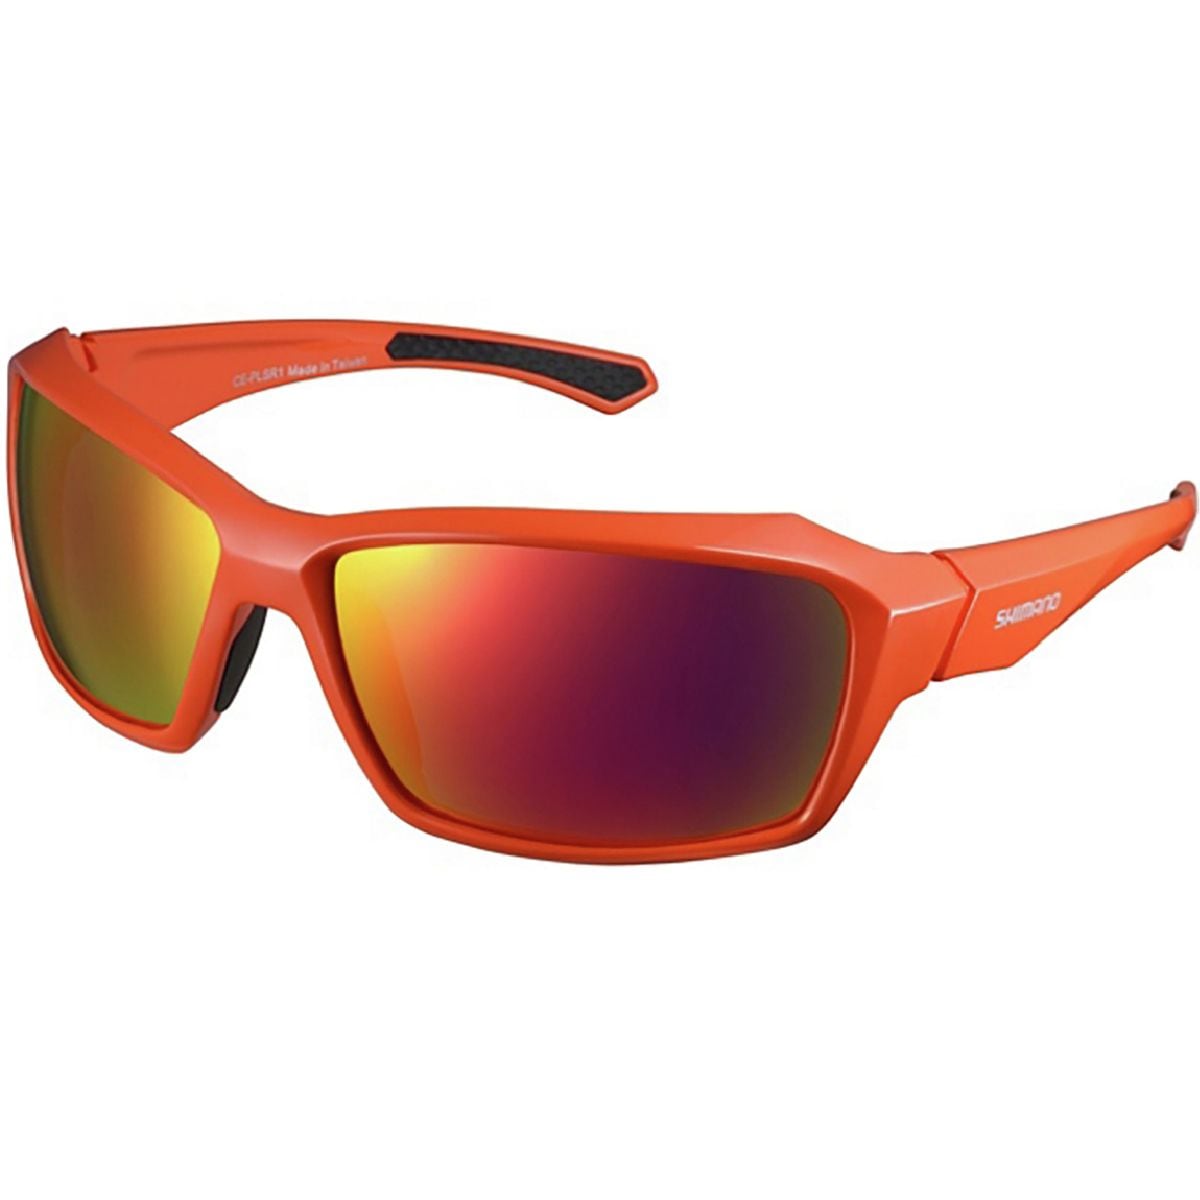 Shimano Pulsar Sunglasses - Men's